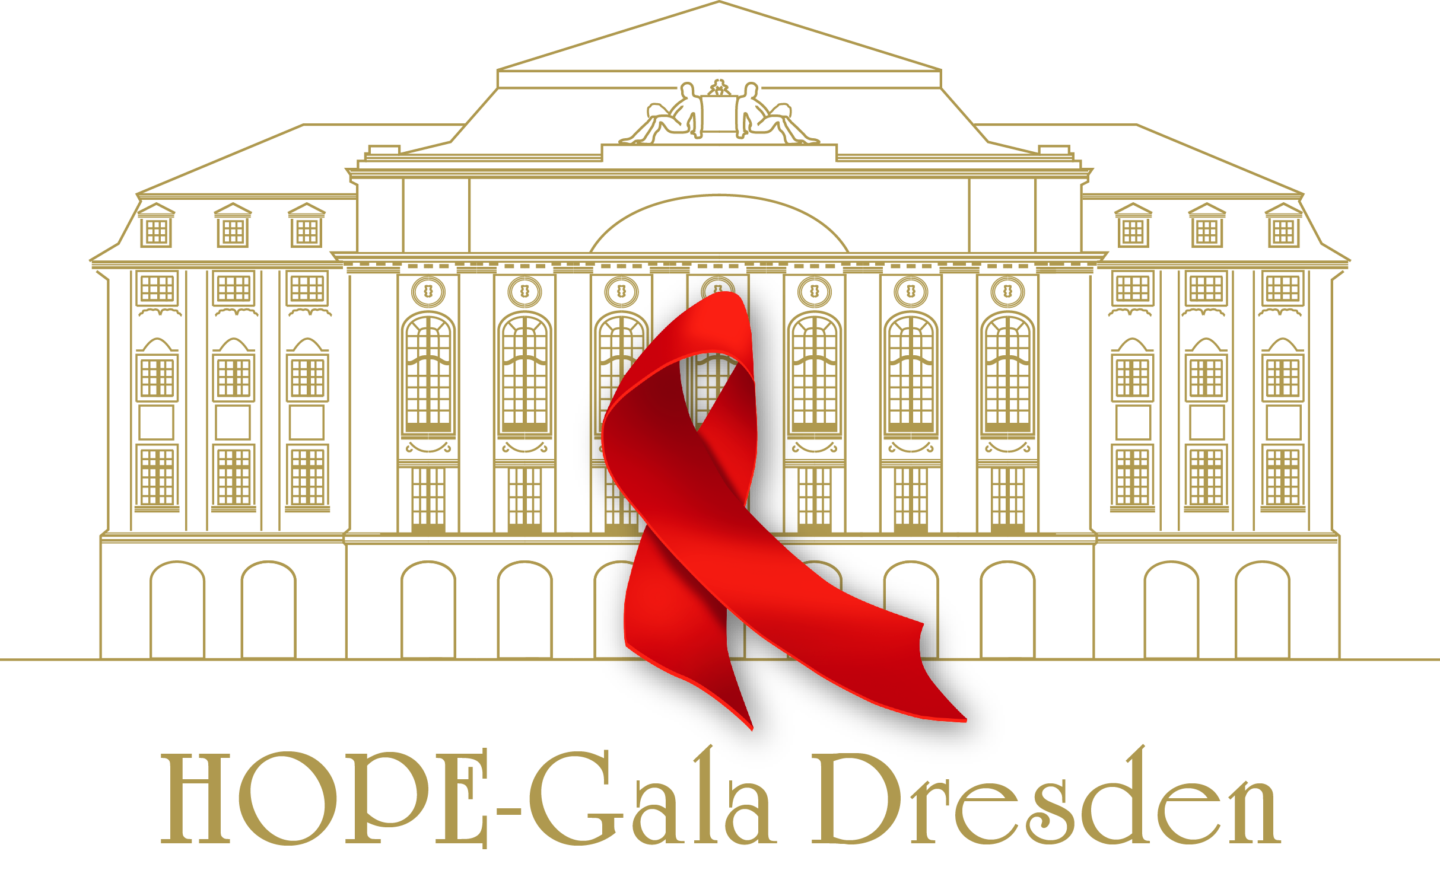 HOPE-Gala Dresden Logo.